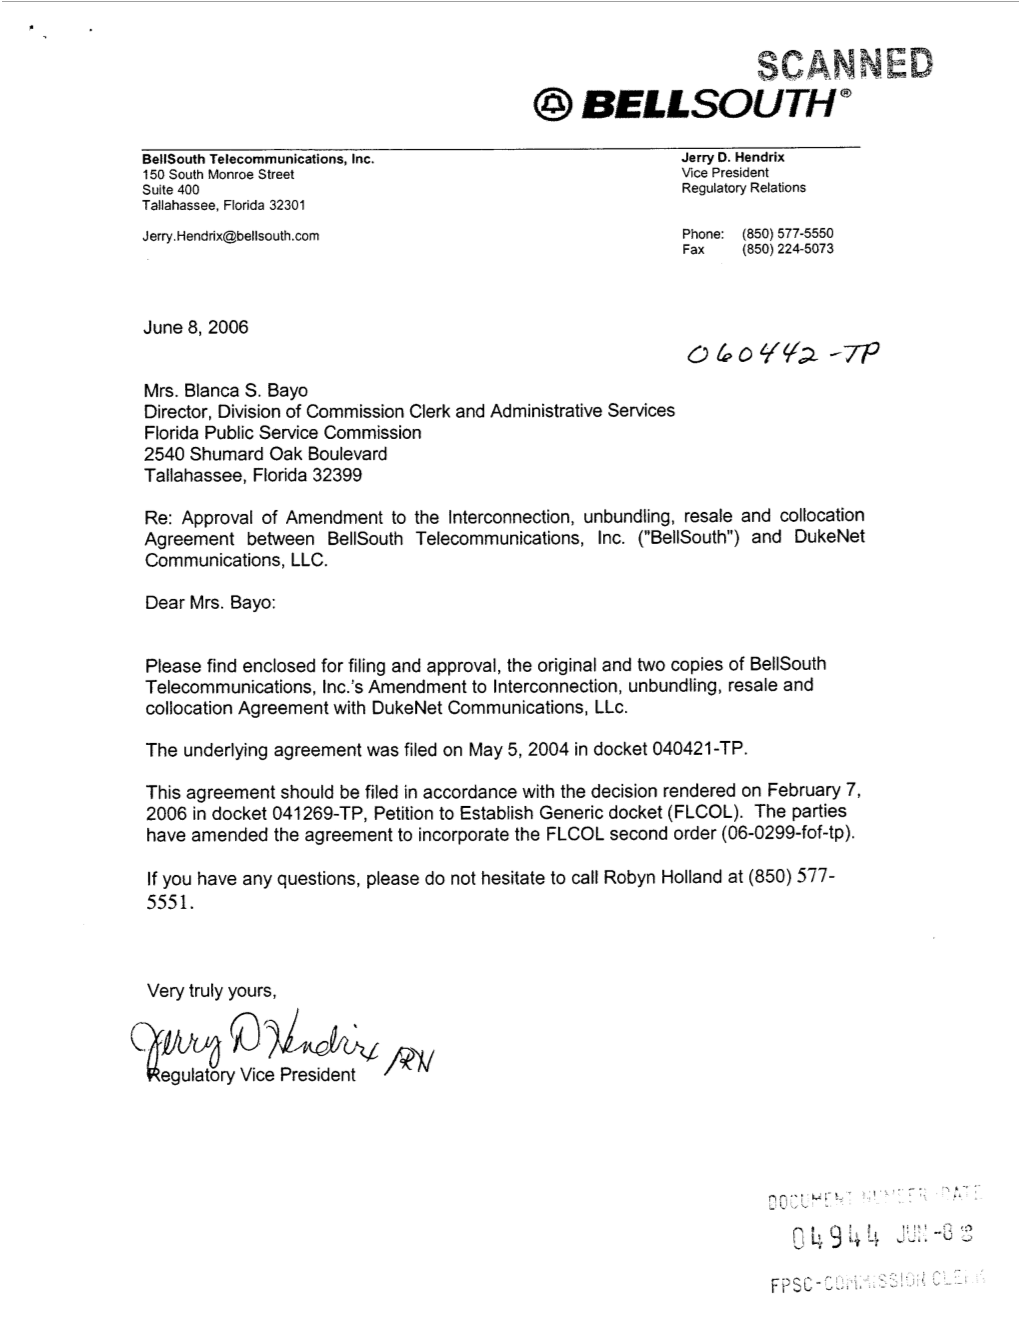 Qww~-/P?Uegulatory Vice President Amendment to the Agreement Between Dukenet Communications, LLC and Bellsouth Telecommunications, Inc